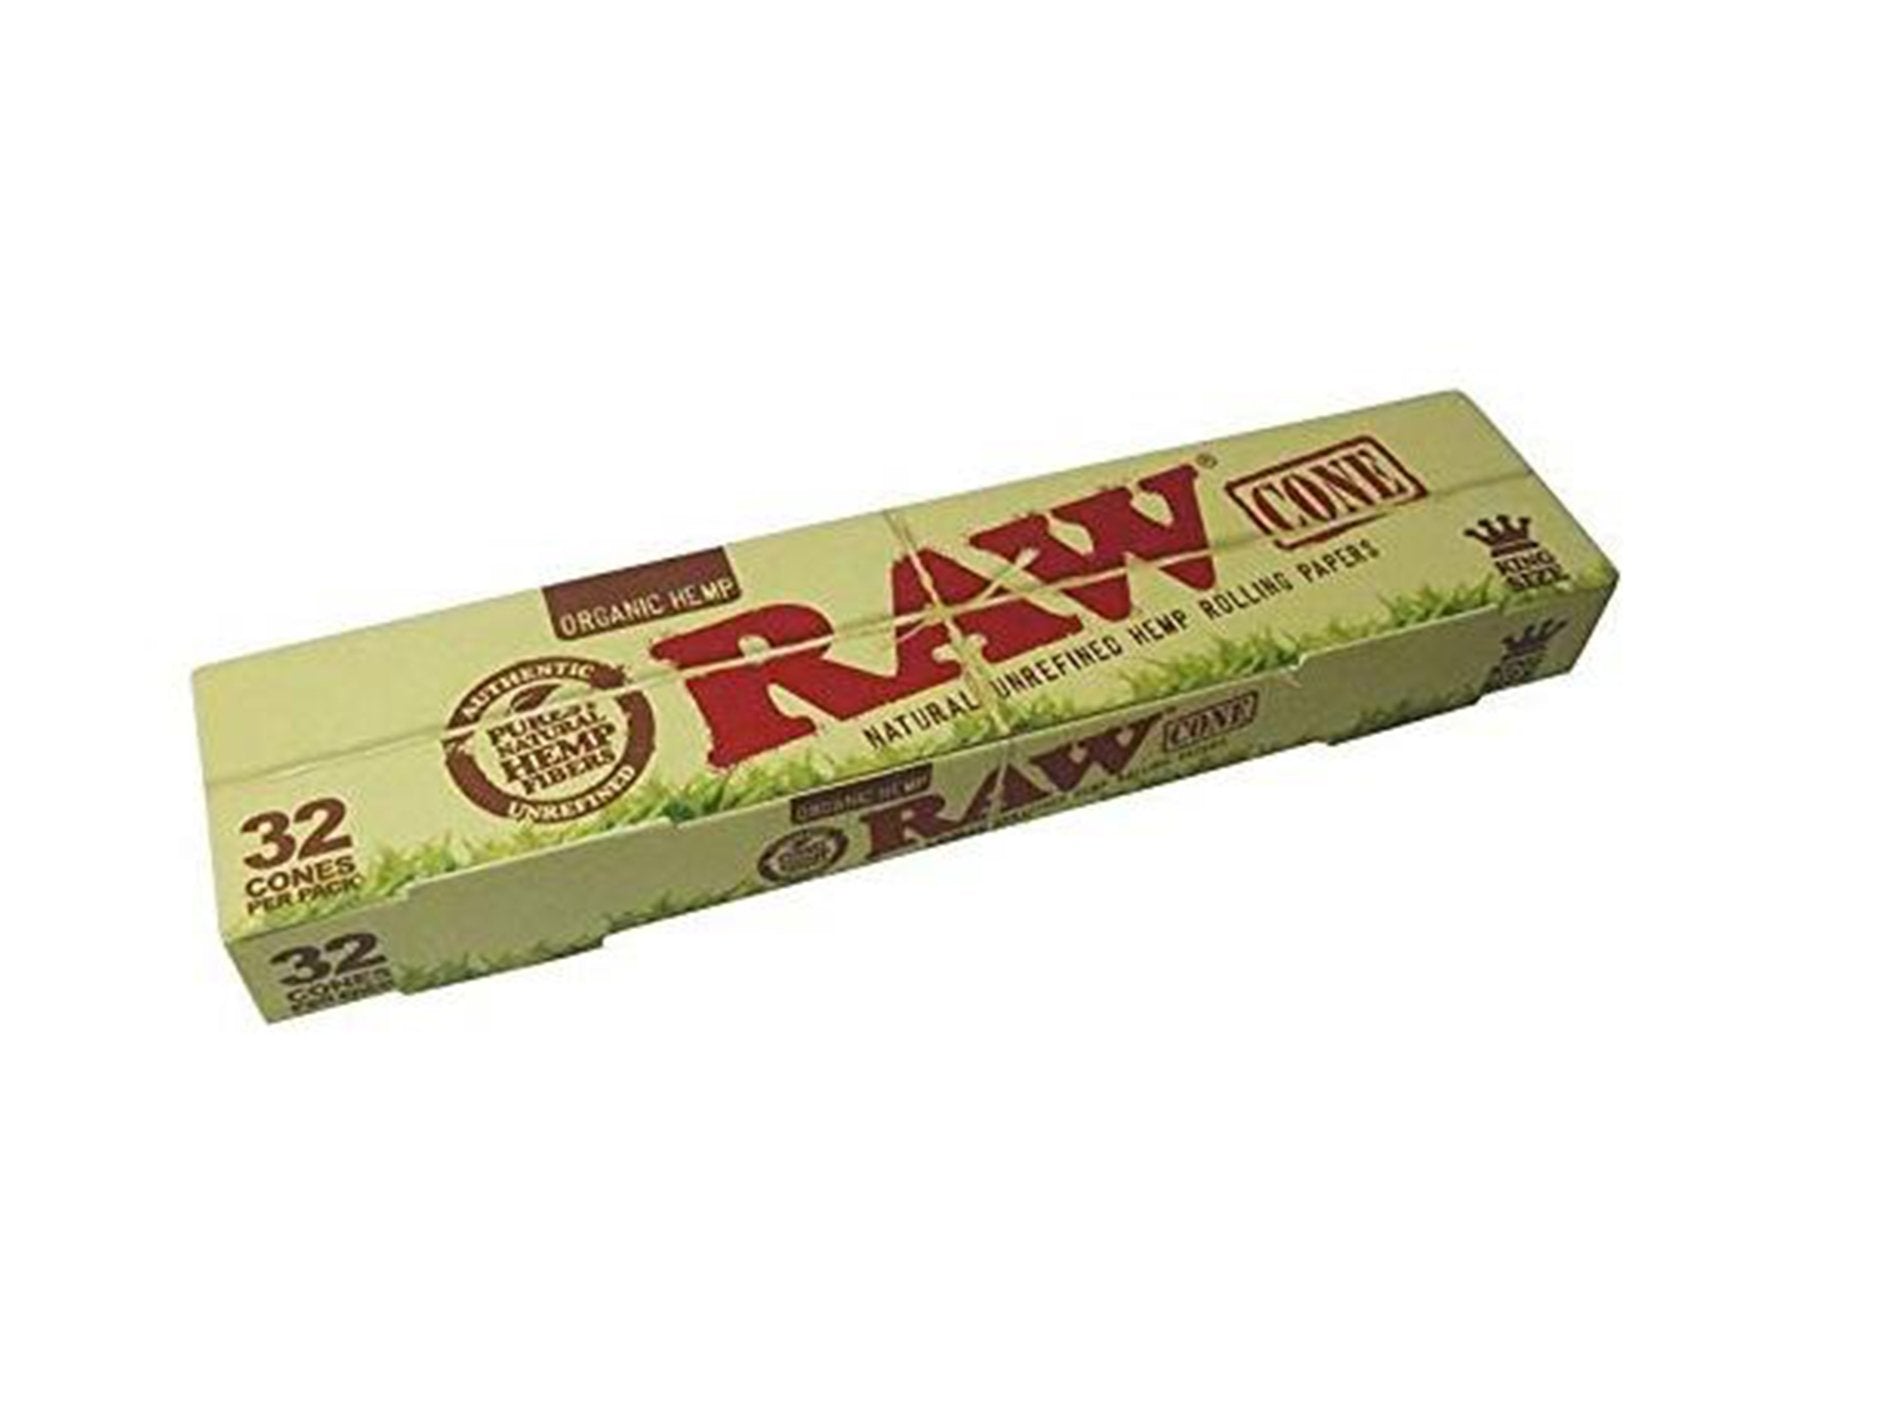 RAW Organic Hemp King Size Pre-Rolled Single Pack Cones - 32pcs - VIR Wholesale